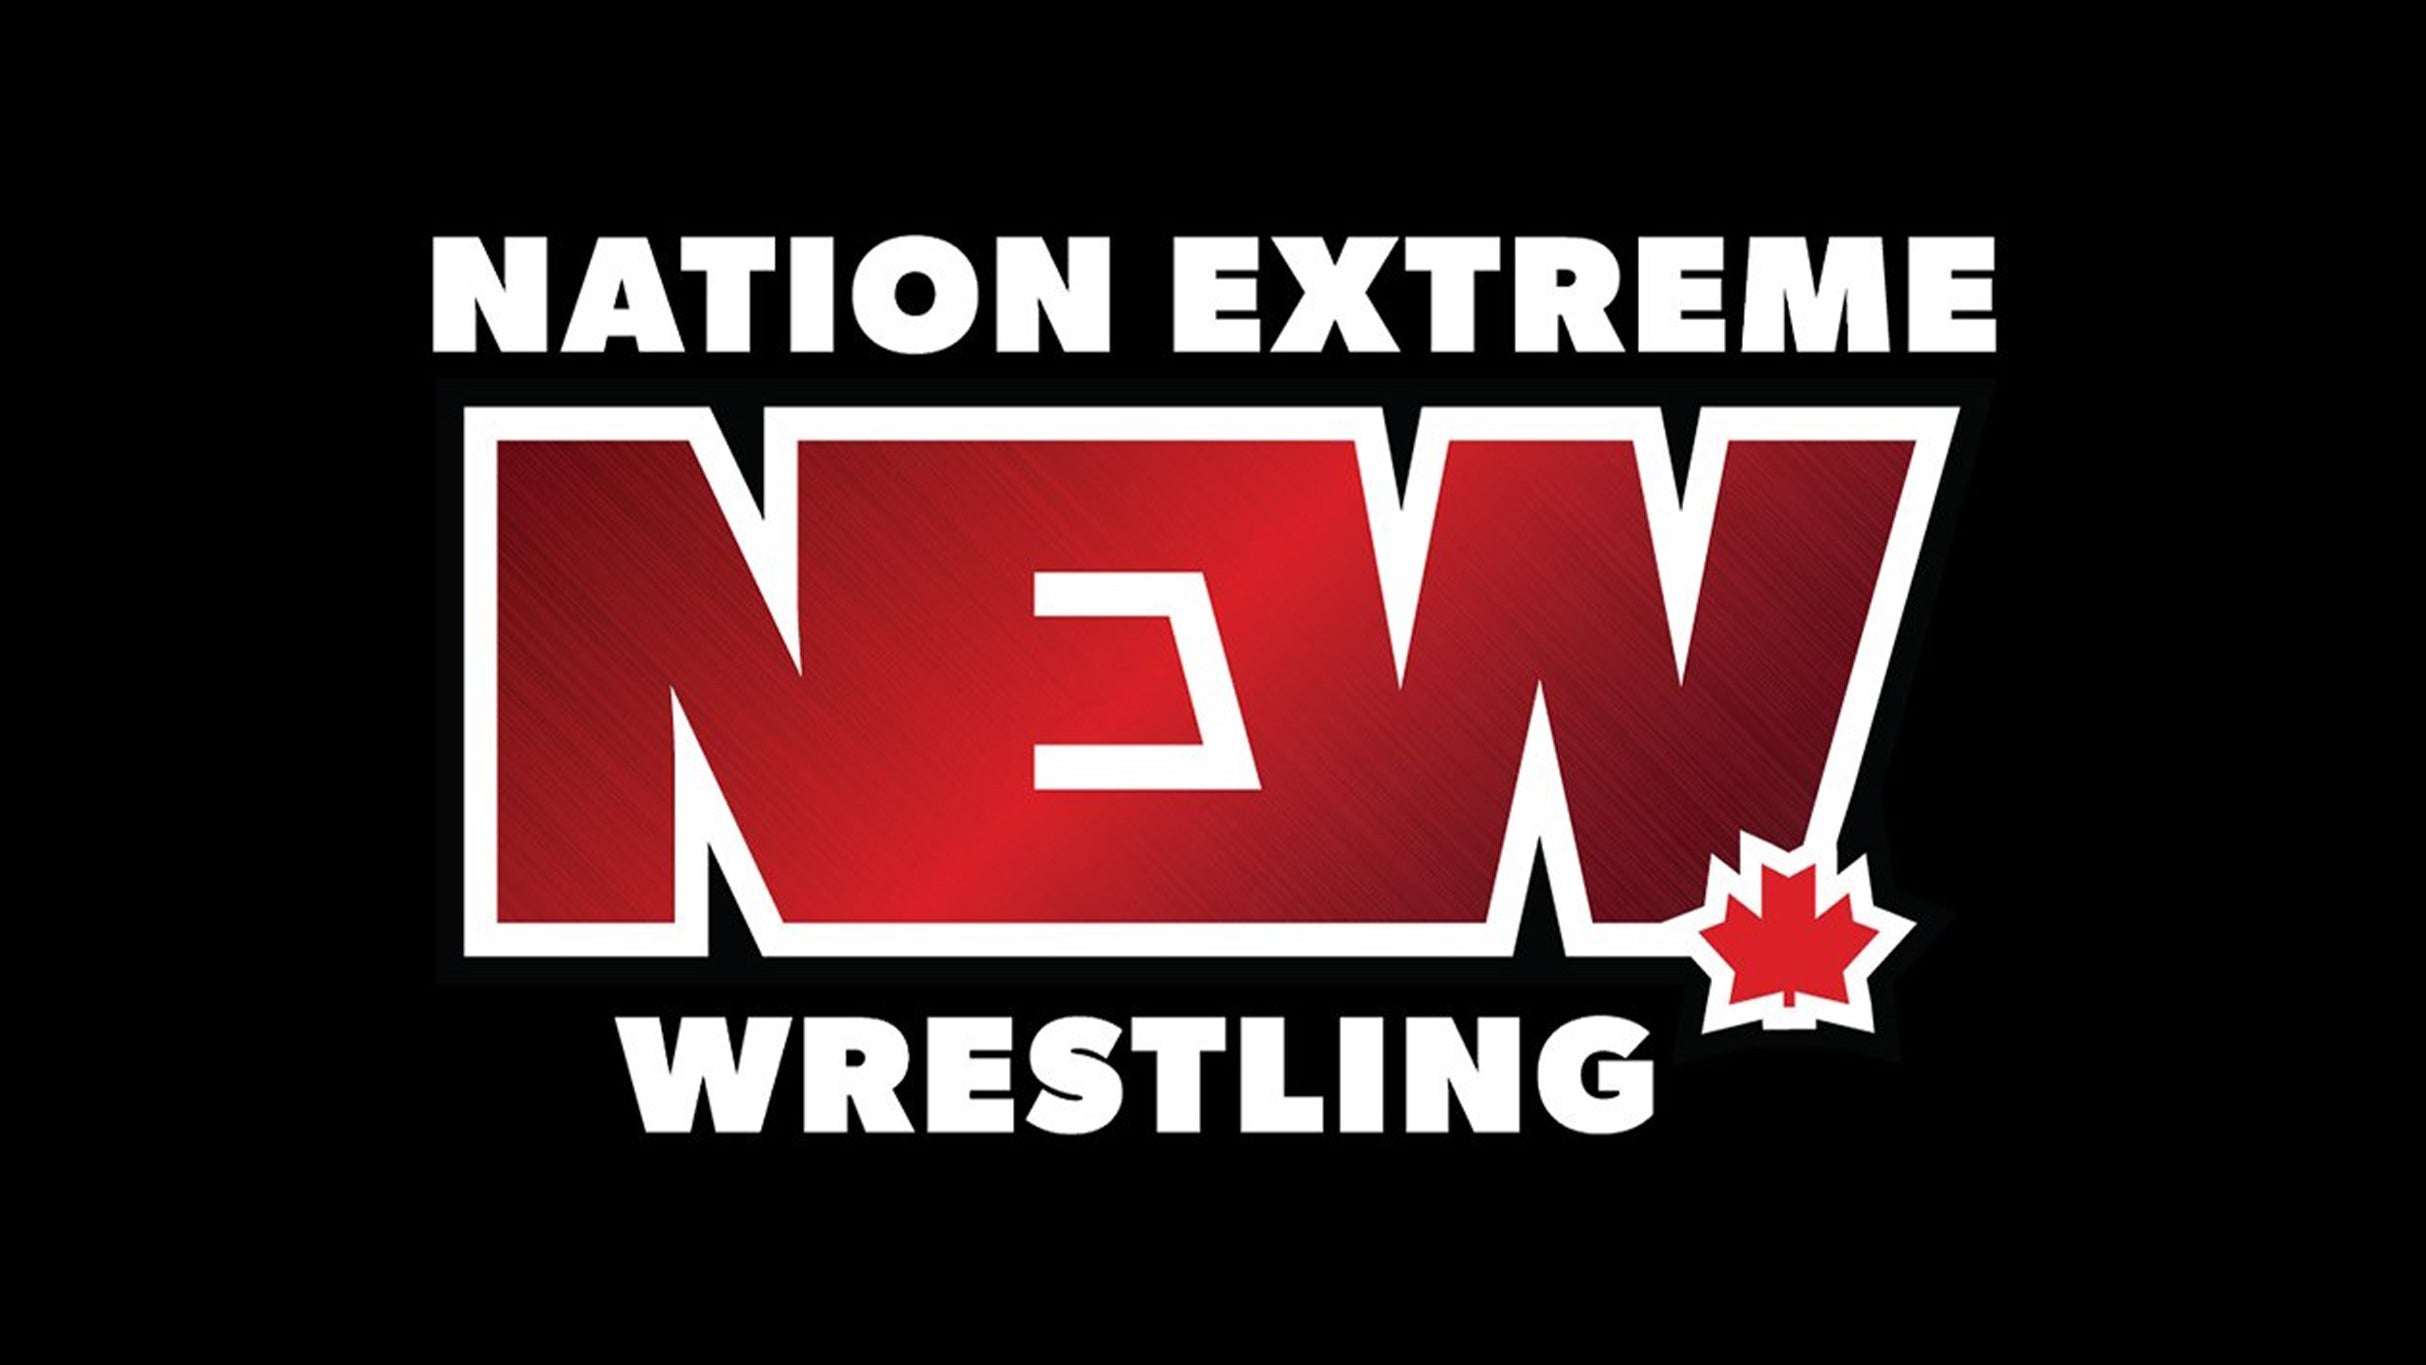 Nation Extreme Wrestling (NEW Wrestling) presales in Vancouver